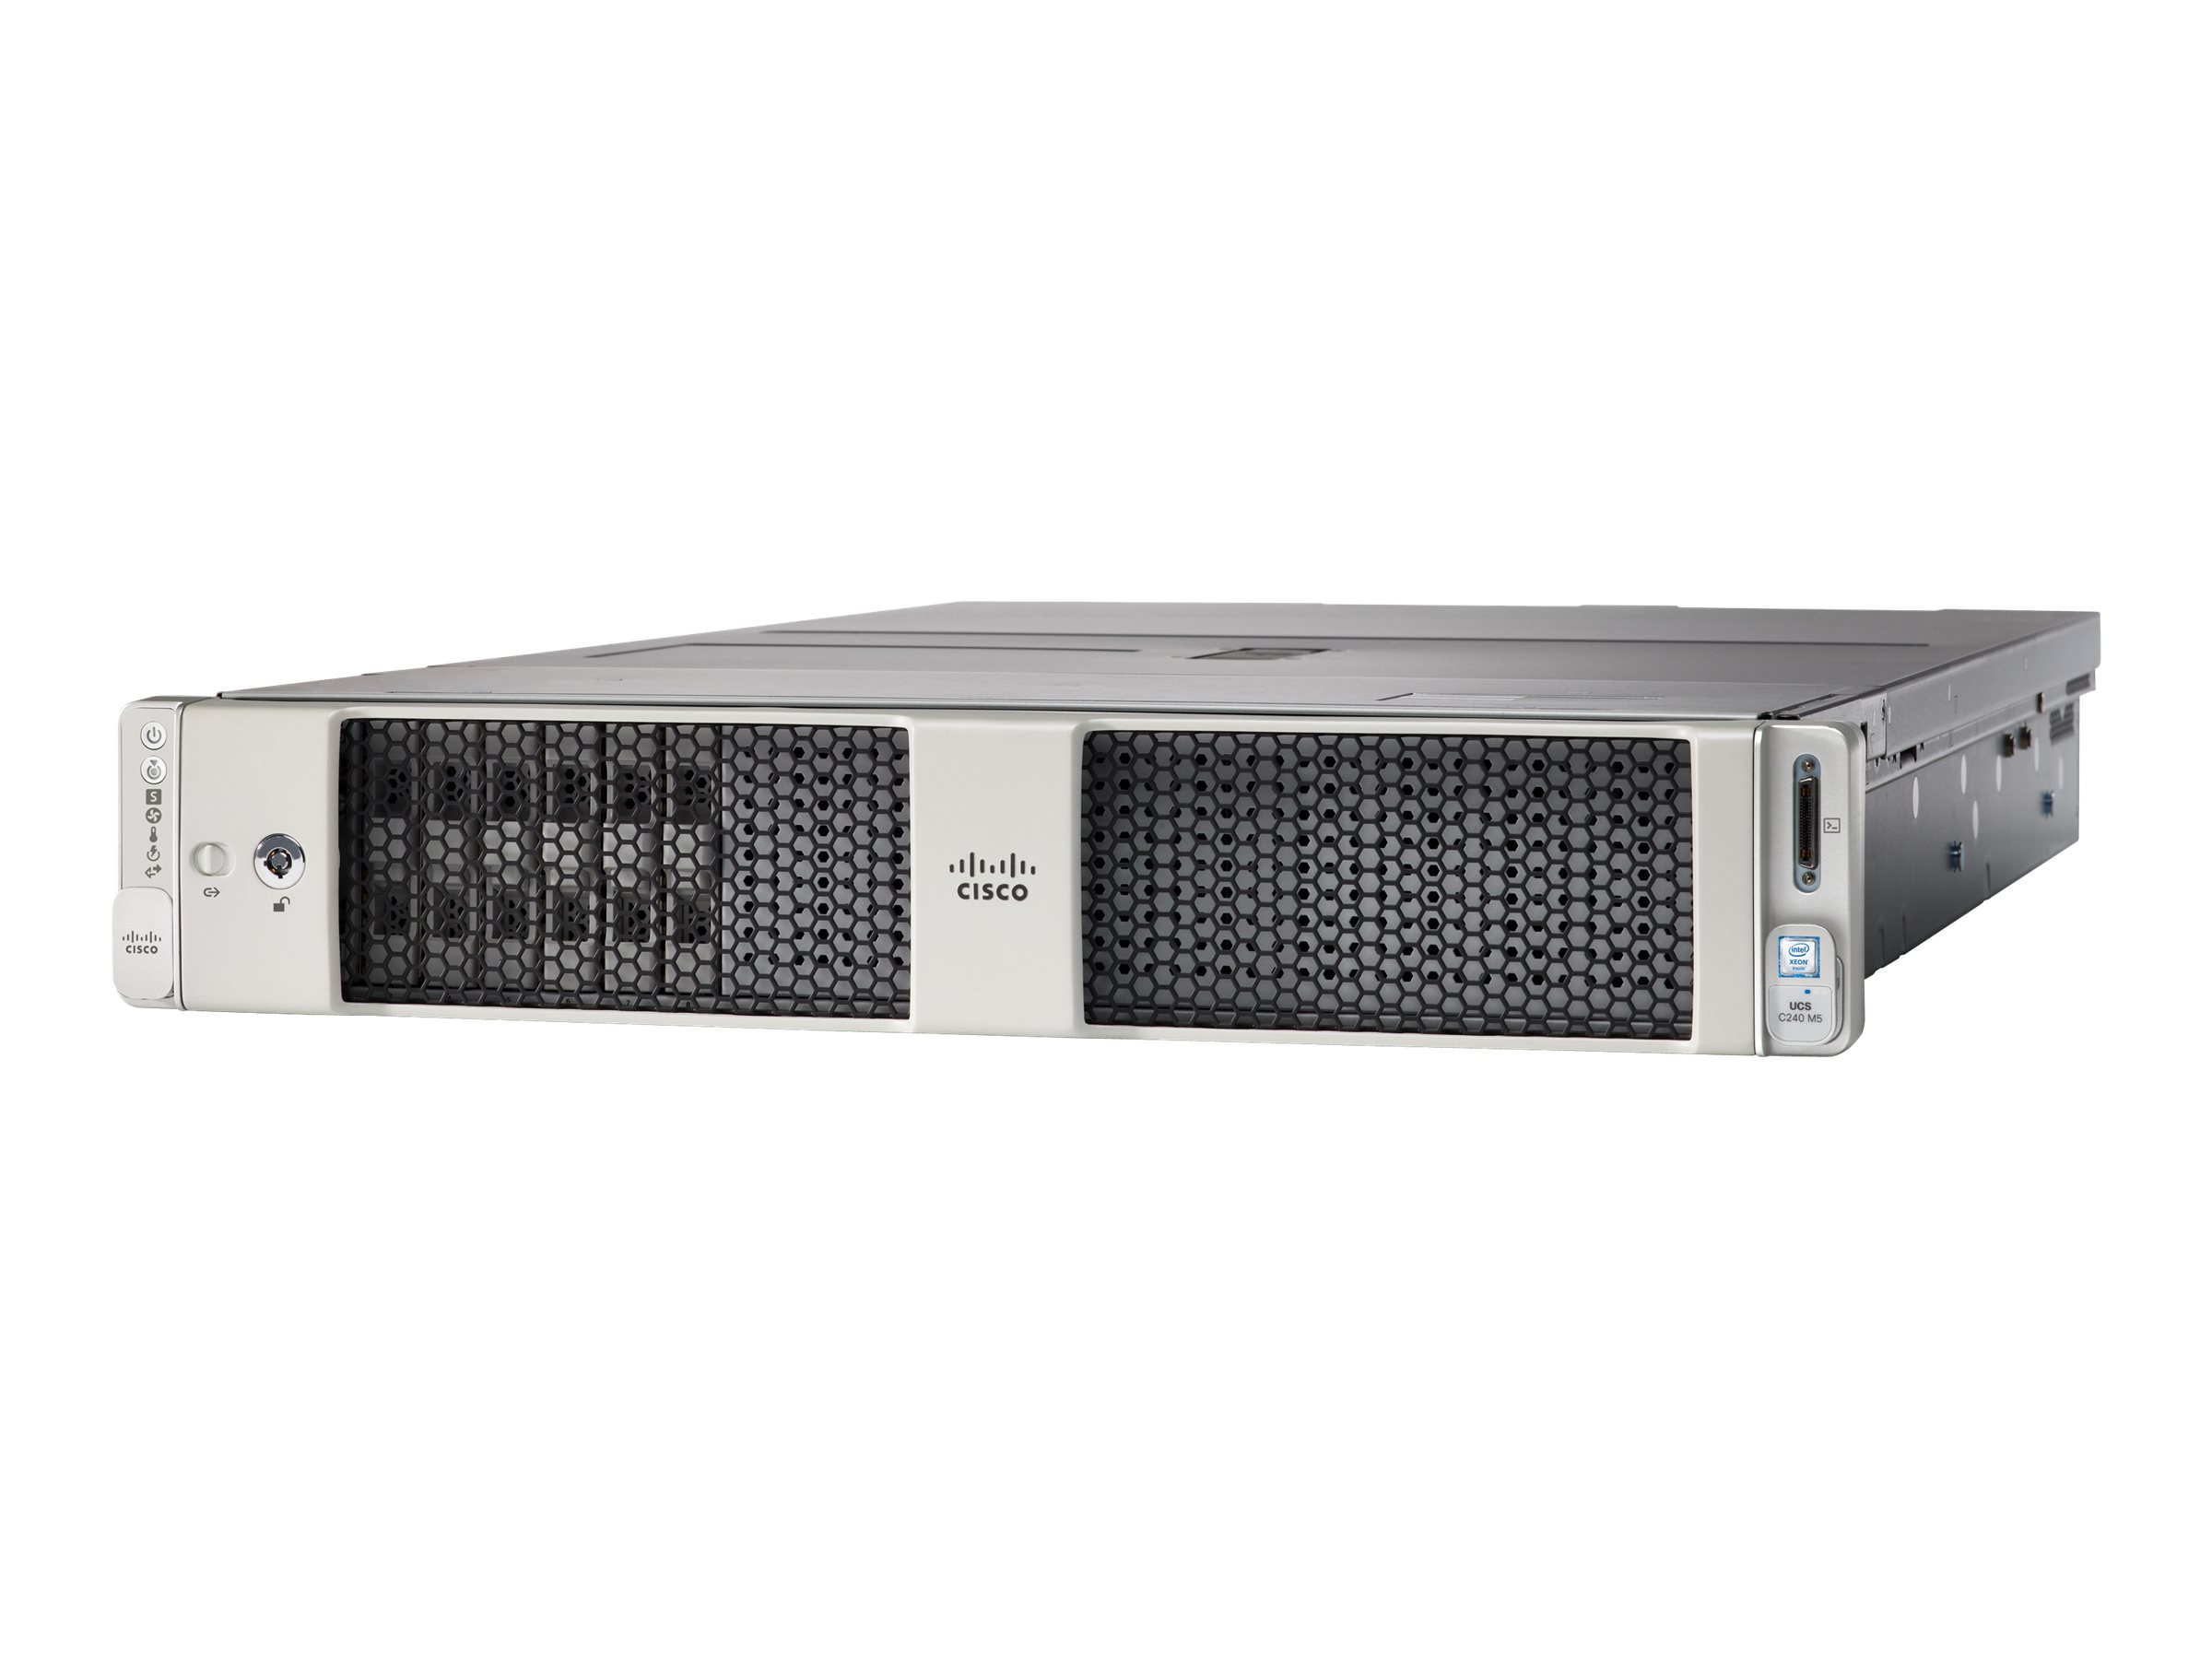 Cisco UCS C240 M5 SFF Rack Server - Server - Rack-Montage - 2U - zweiweg - keine CPU